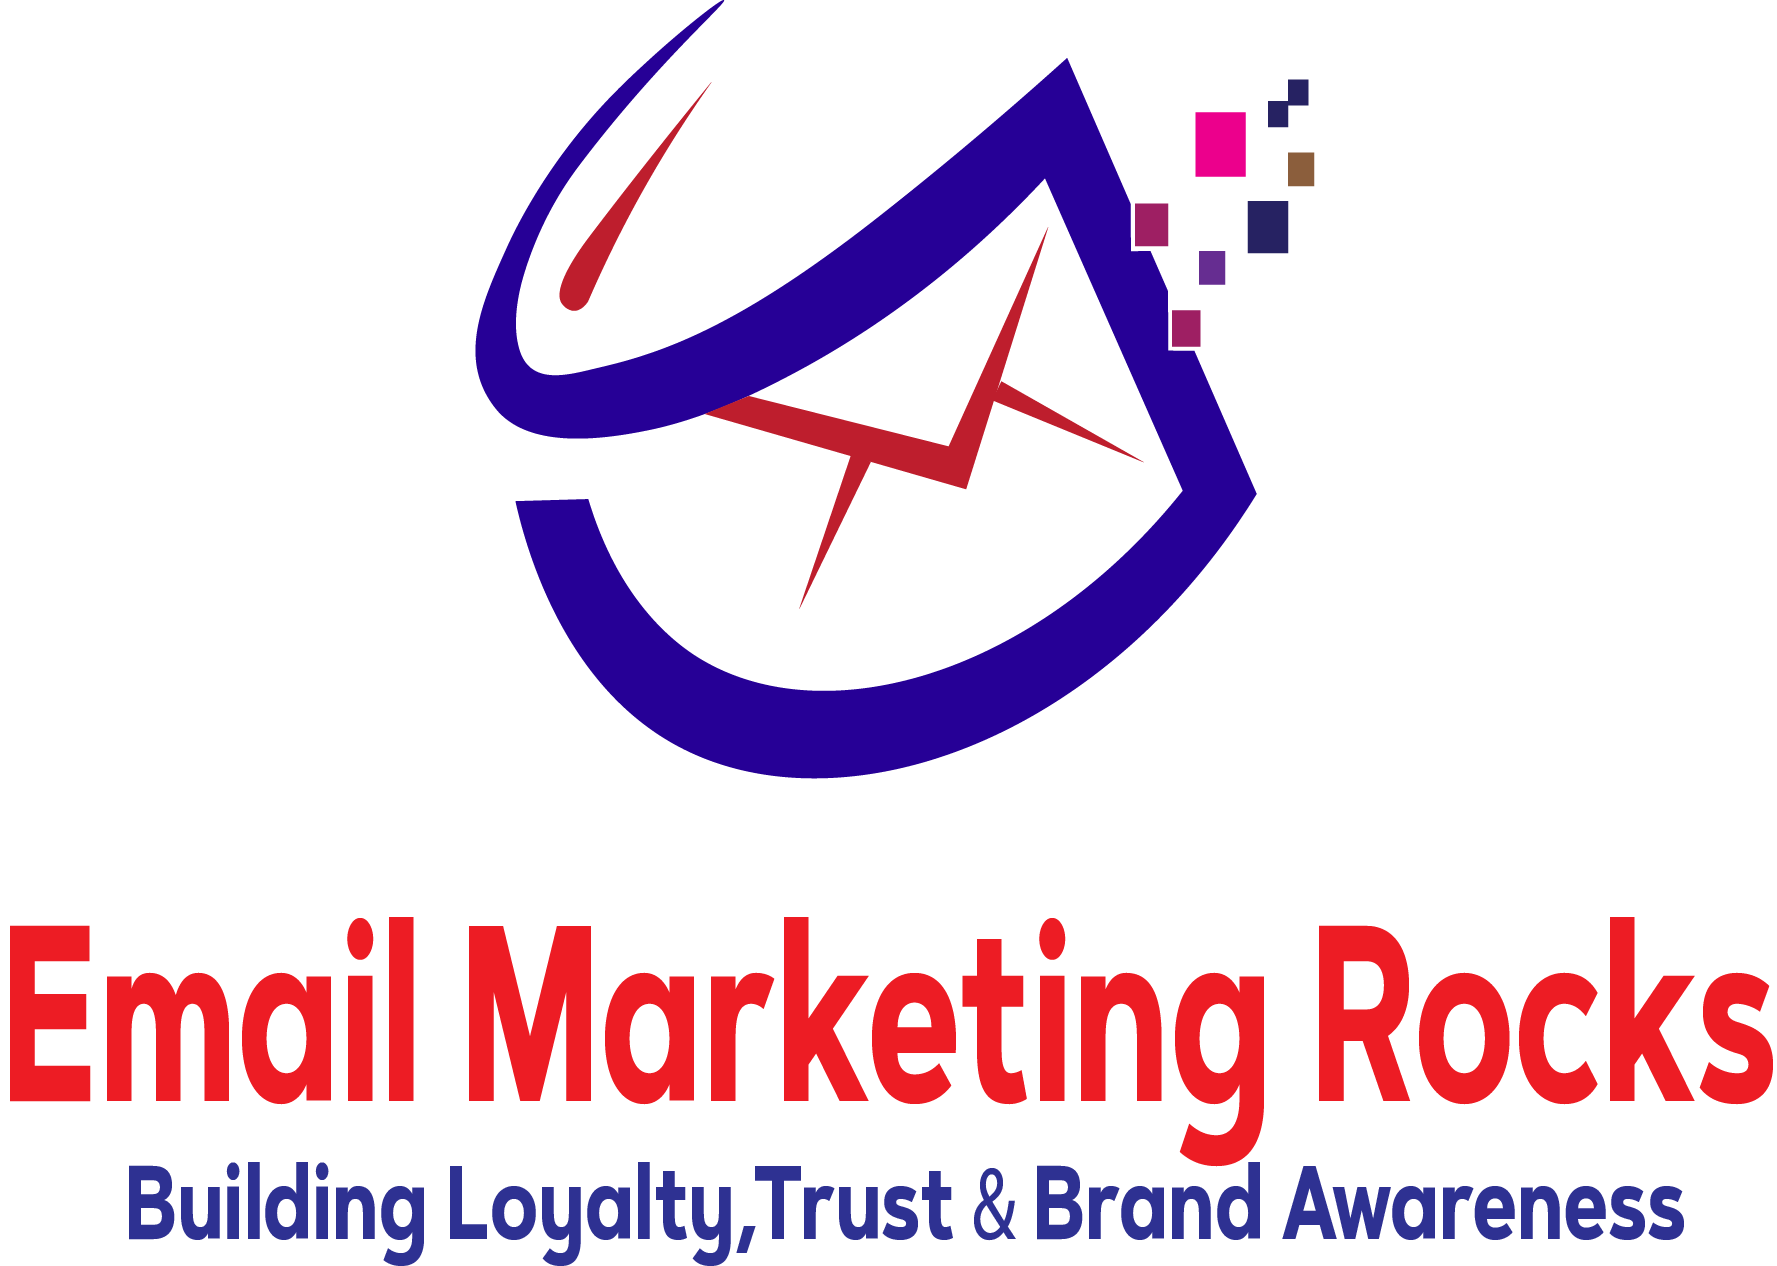 Email Marketing Rocks

Building Loyalty, Trust & Brand Awareness - Email Marketing Rocks

Building Loyalty, Trust & Brand Awareness - Email Marketing Rocks

Building Loyalty, Trust & Brand Awareness